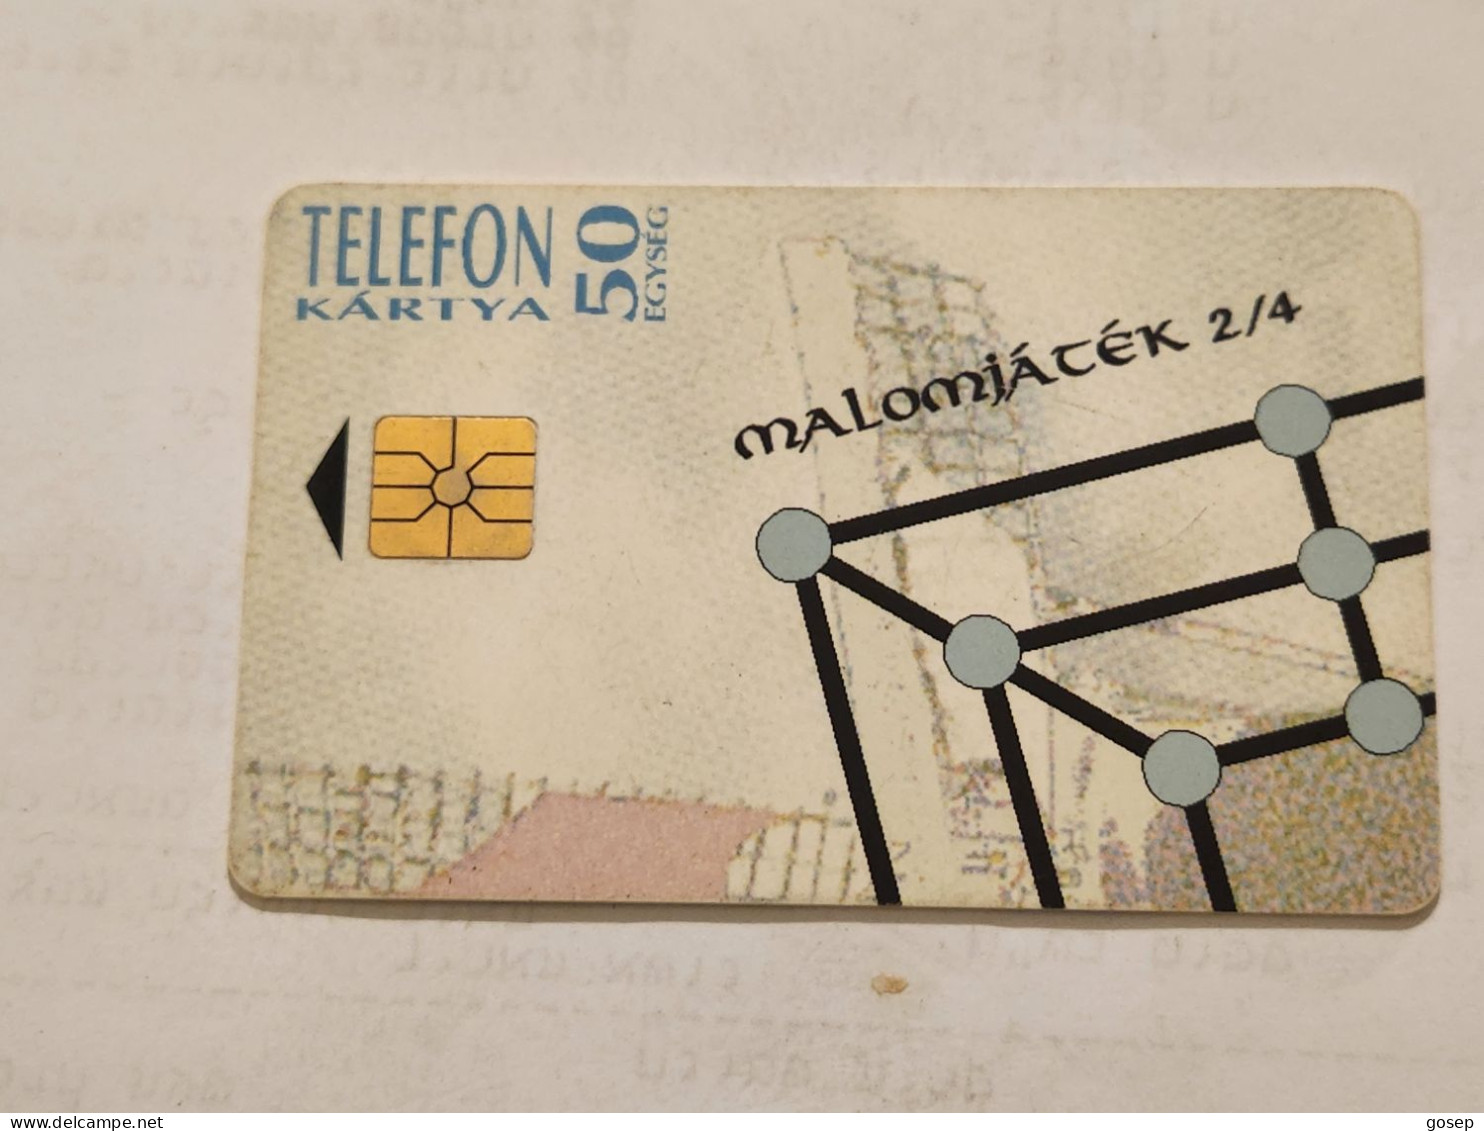 HUNGARY-(HU-P-1994-18Aa)-Malom -Tata (2/4)-(152)(50units)(1994)(tirage-250.000)-USED CARD+1card Prepiad Free - Hungary